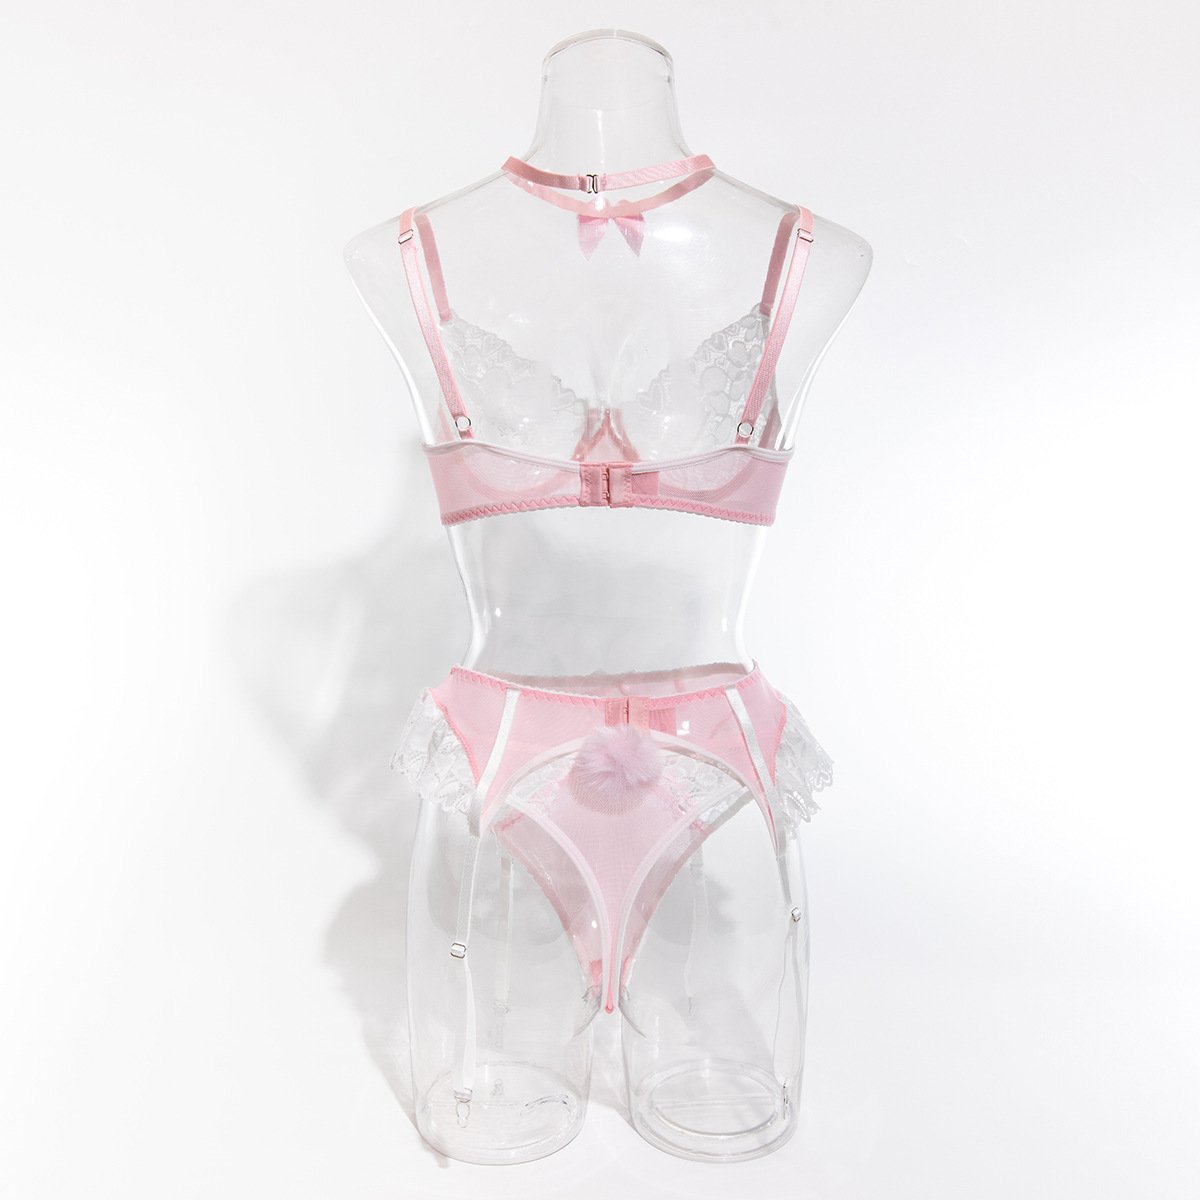 Lace bowknot fluffy garter 3 piece lingerie set